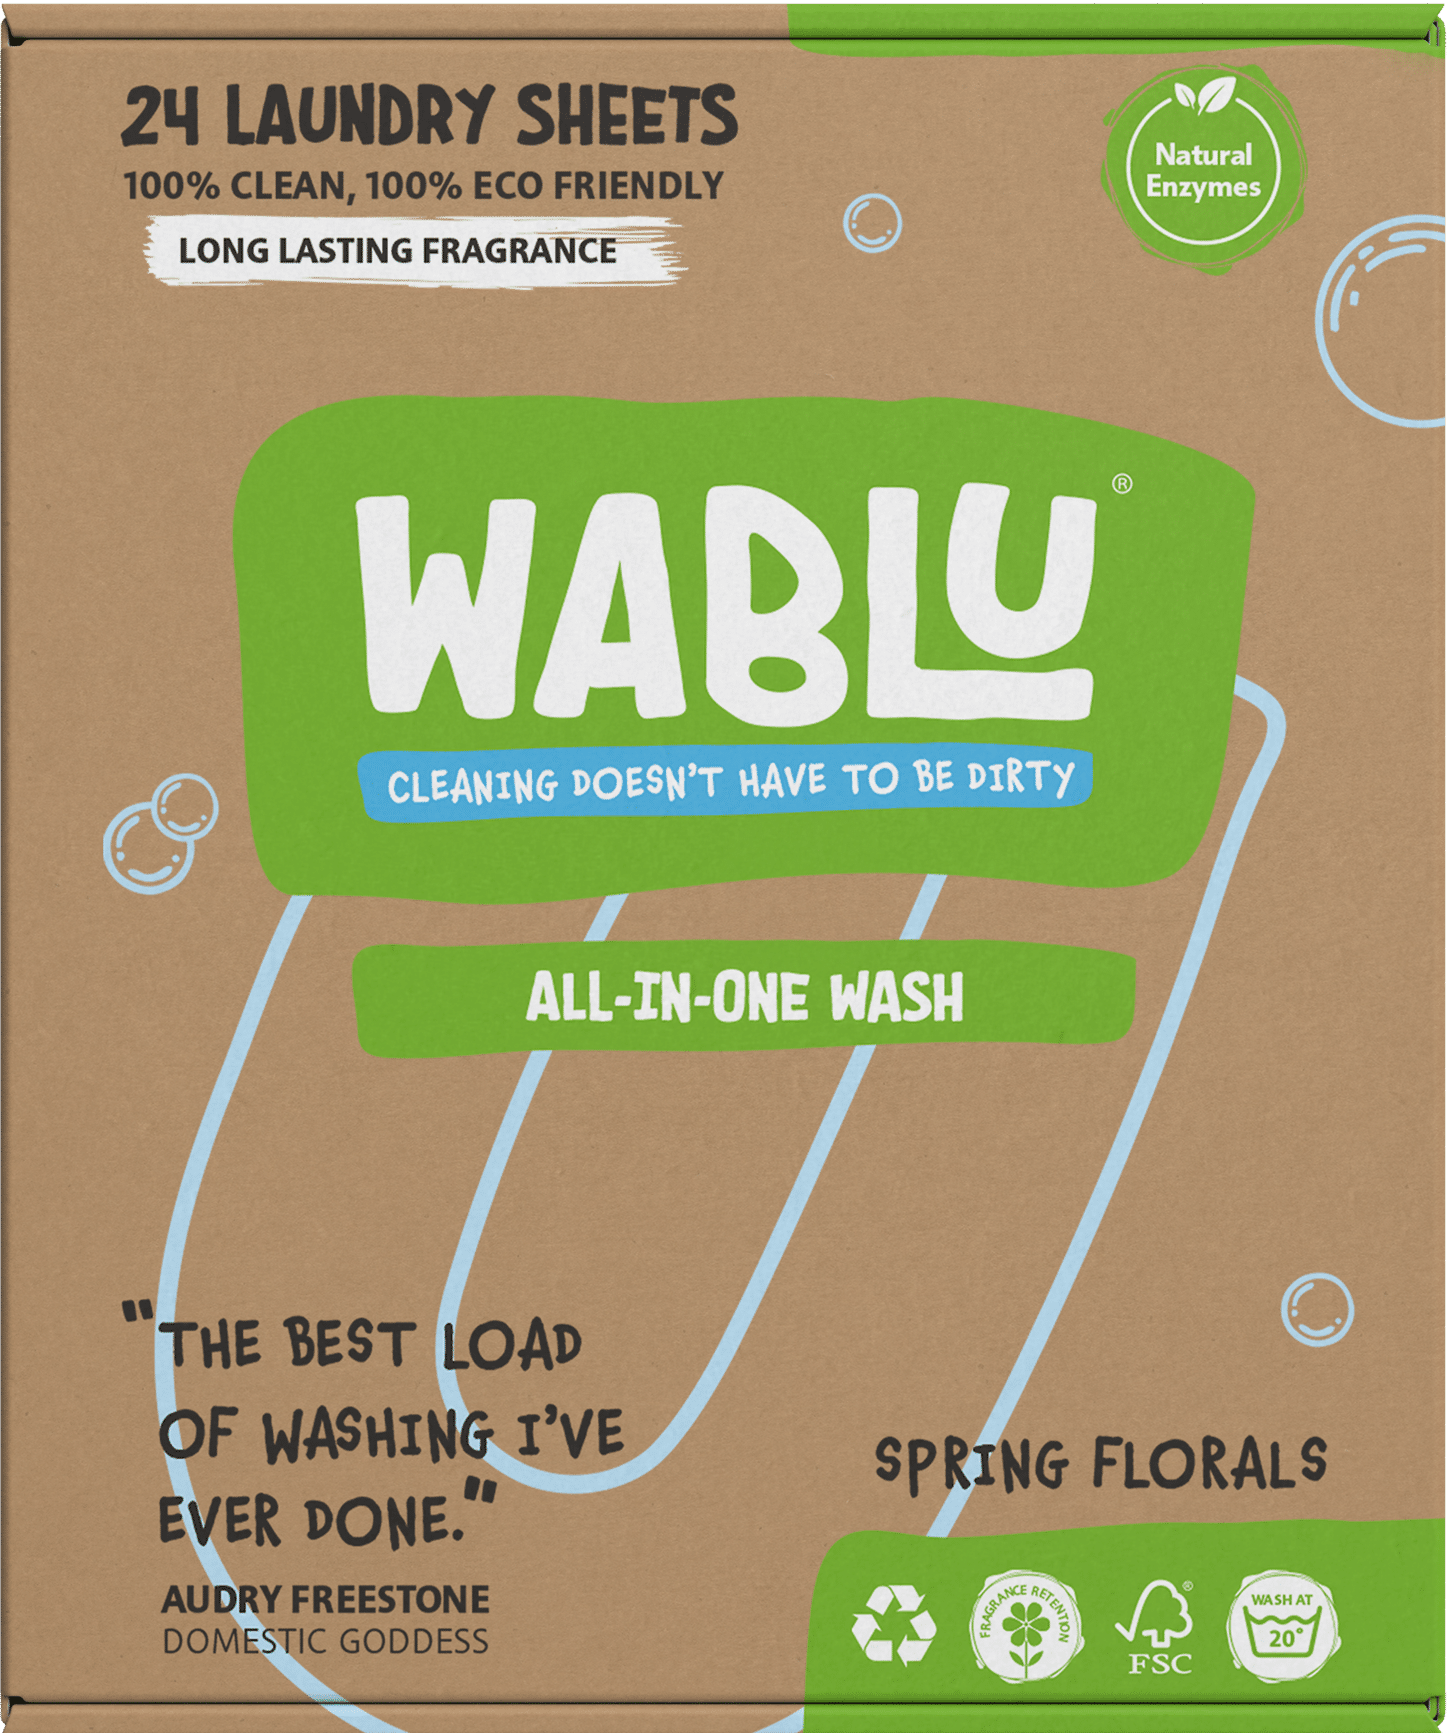 WABLU Laundry detergent sheets